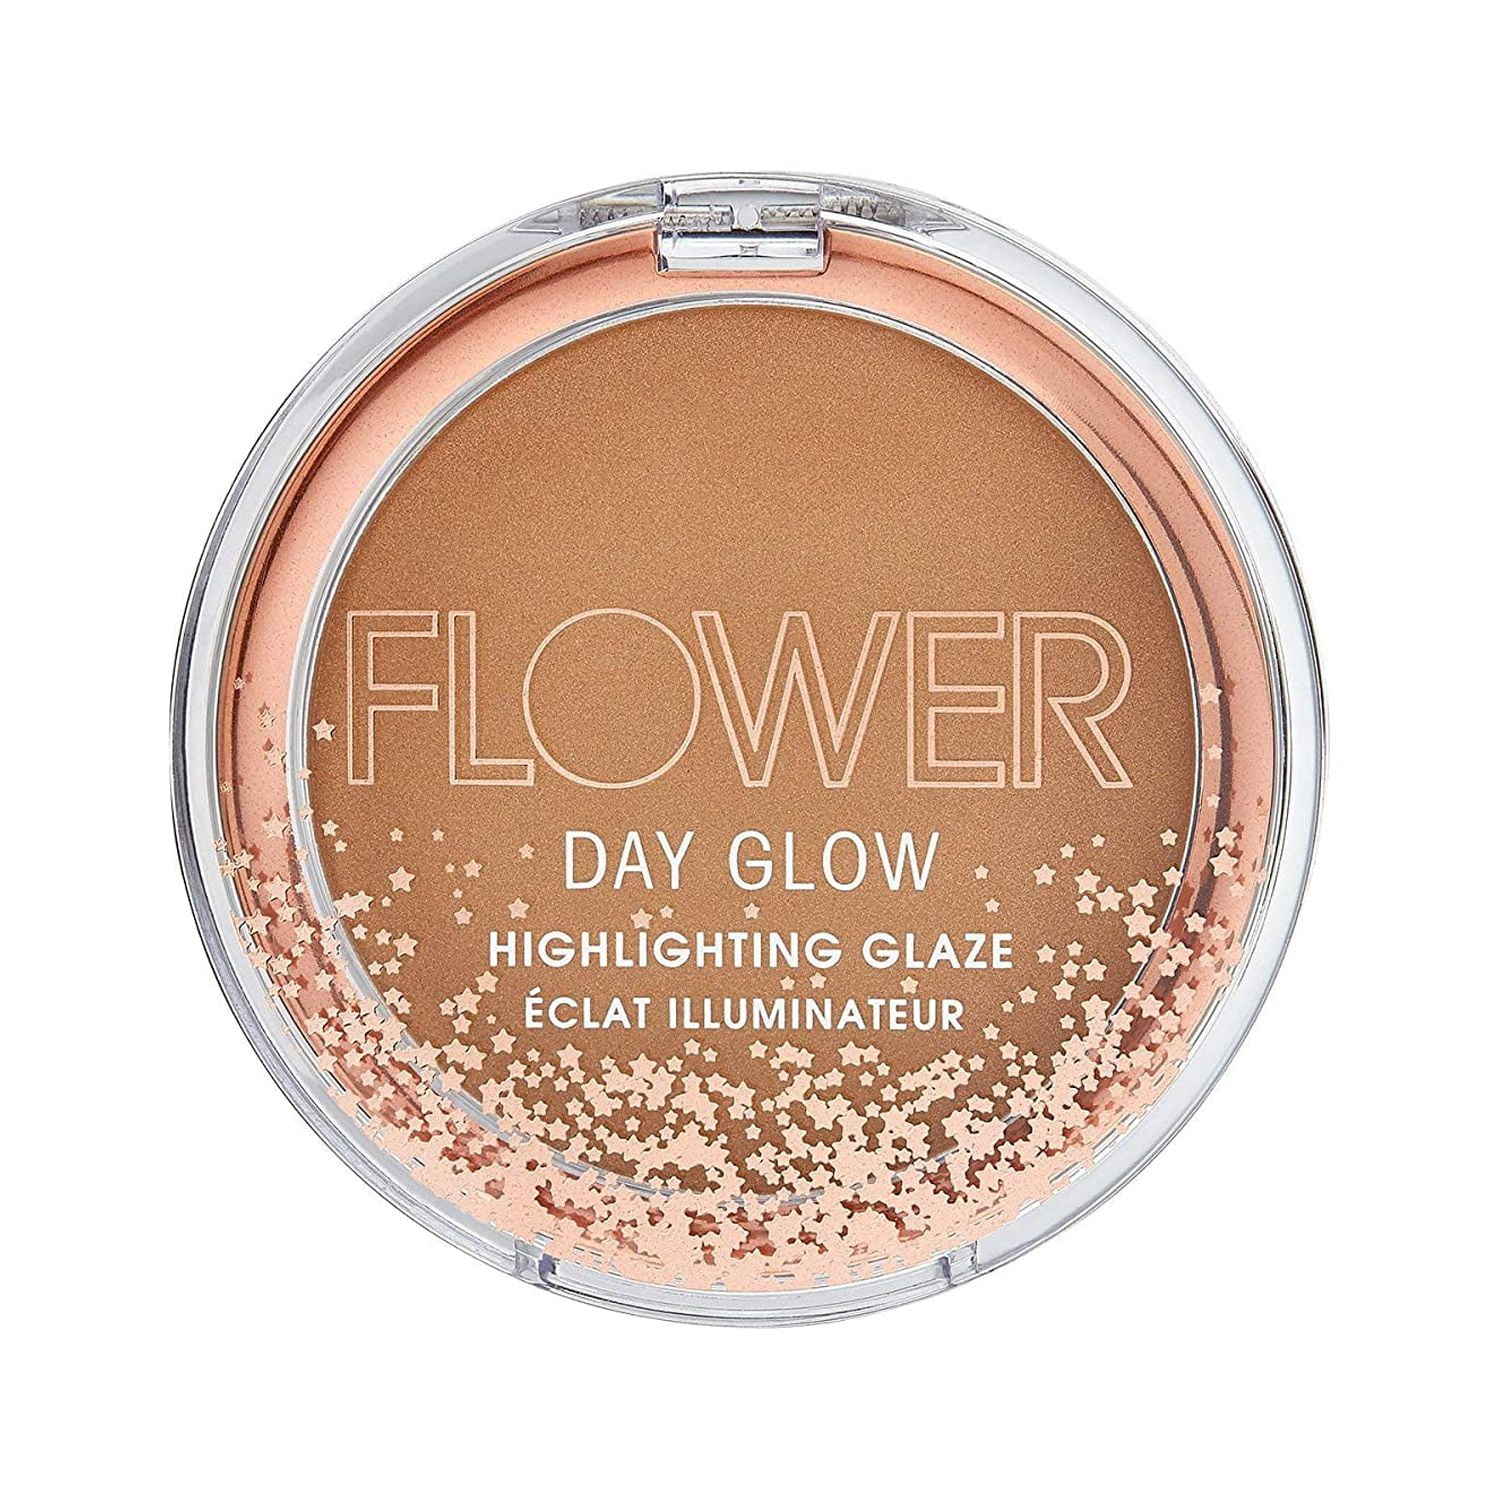 2 Pack Flower Beauty Day Glow Highlighting Glaze DG2 Ablaze